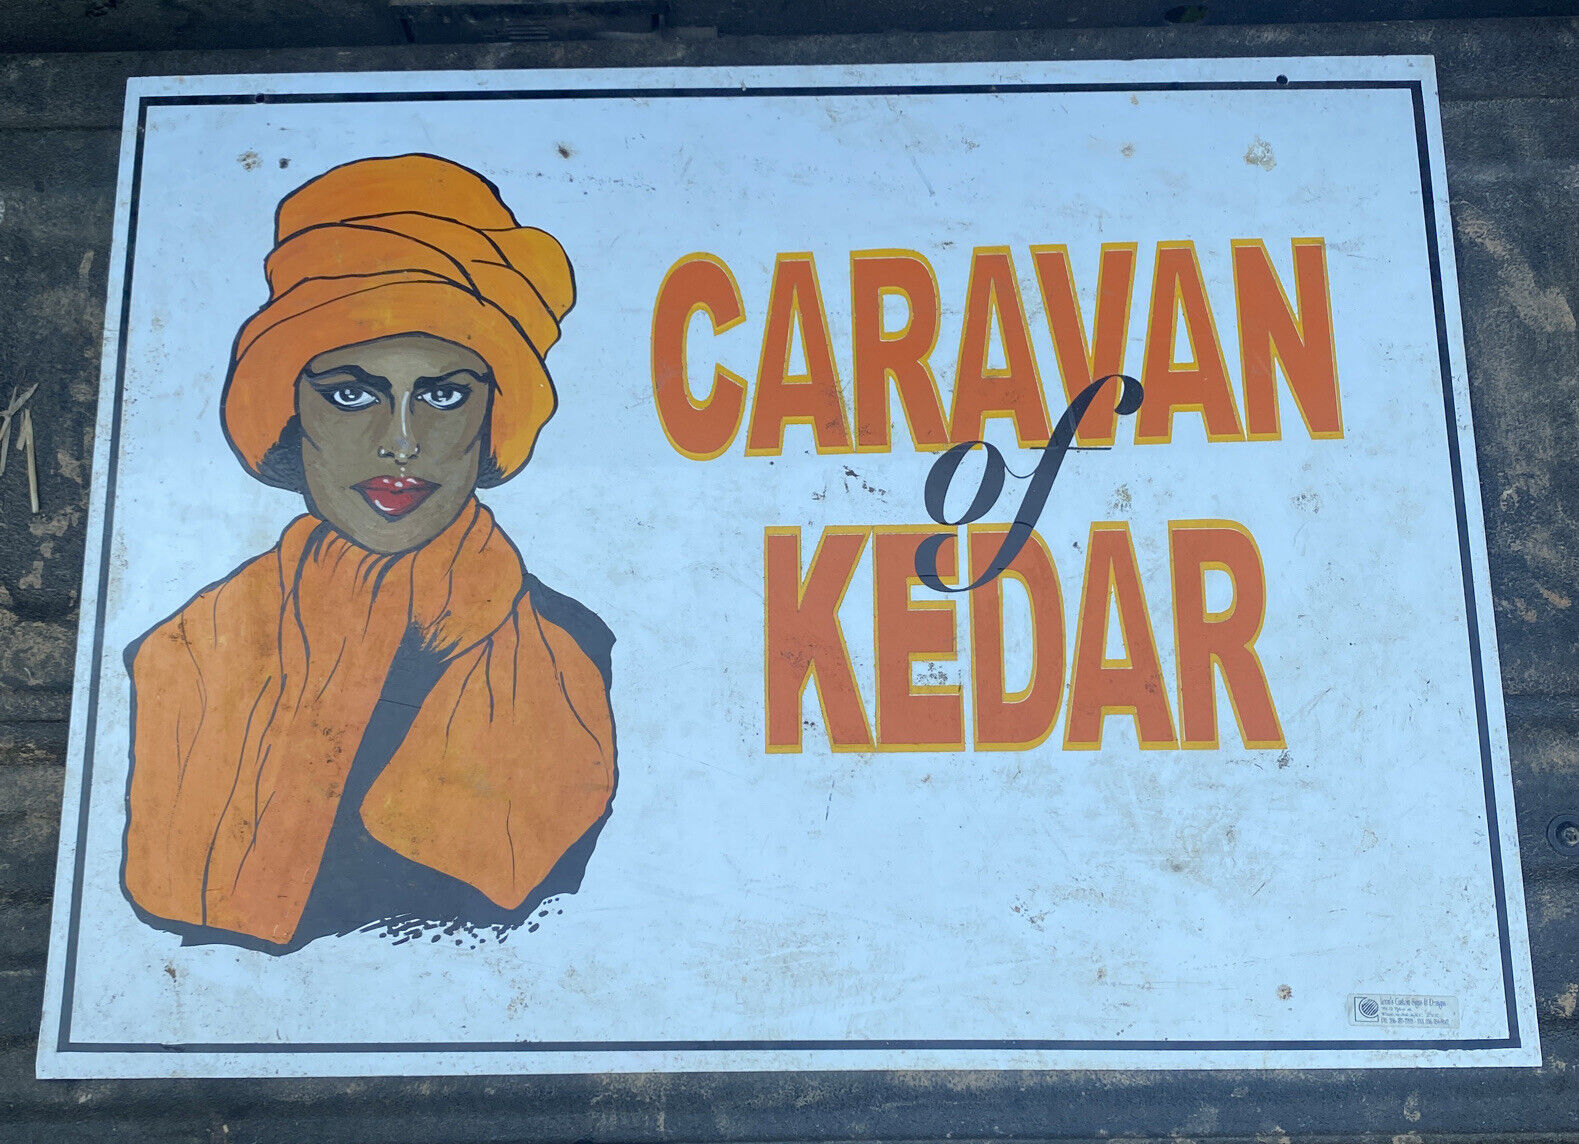 Vintage Leons Custom Signs & Designs Caravan Of Kedar 18X24 Sign 2 Sided